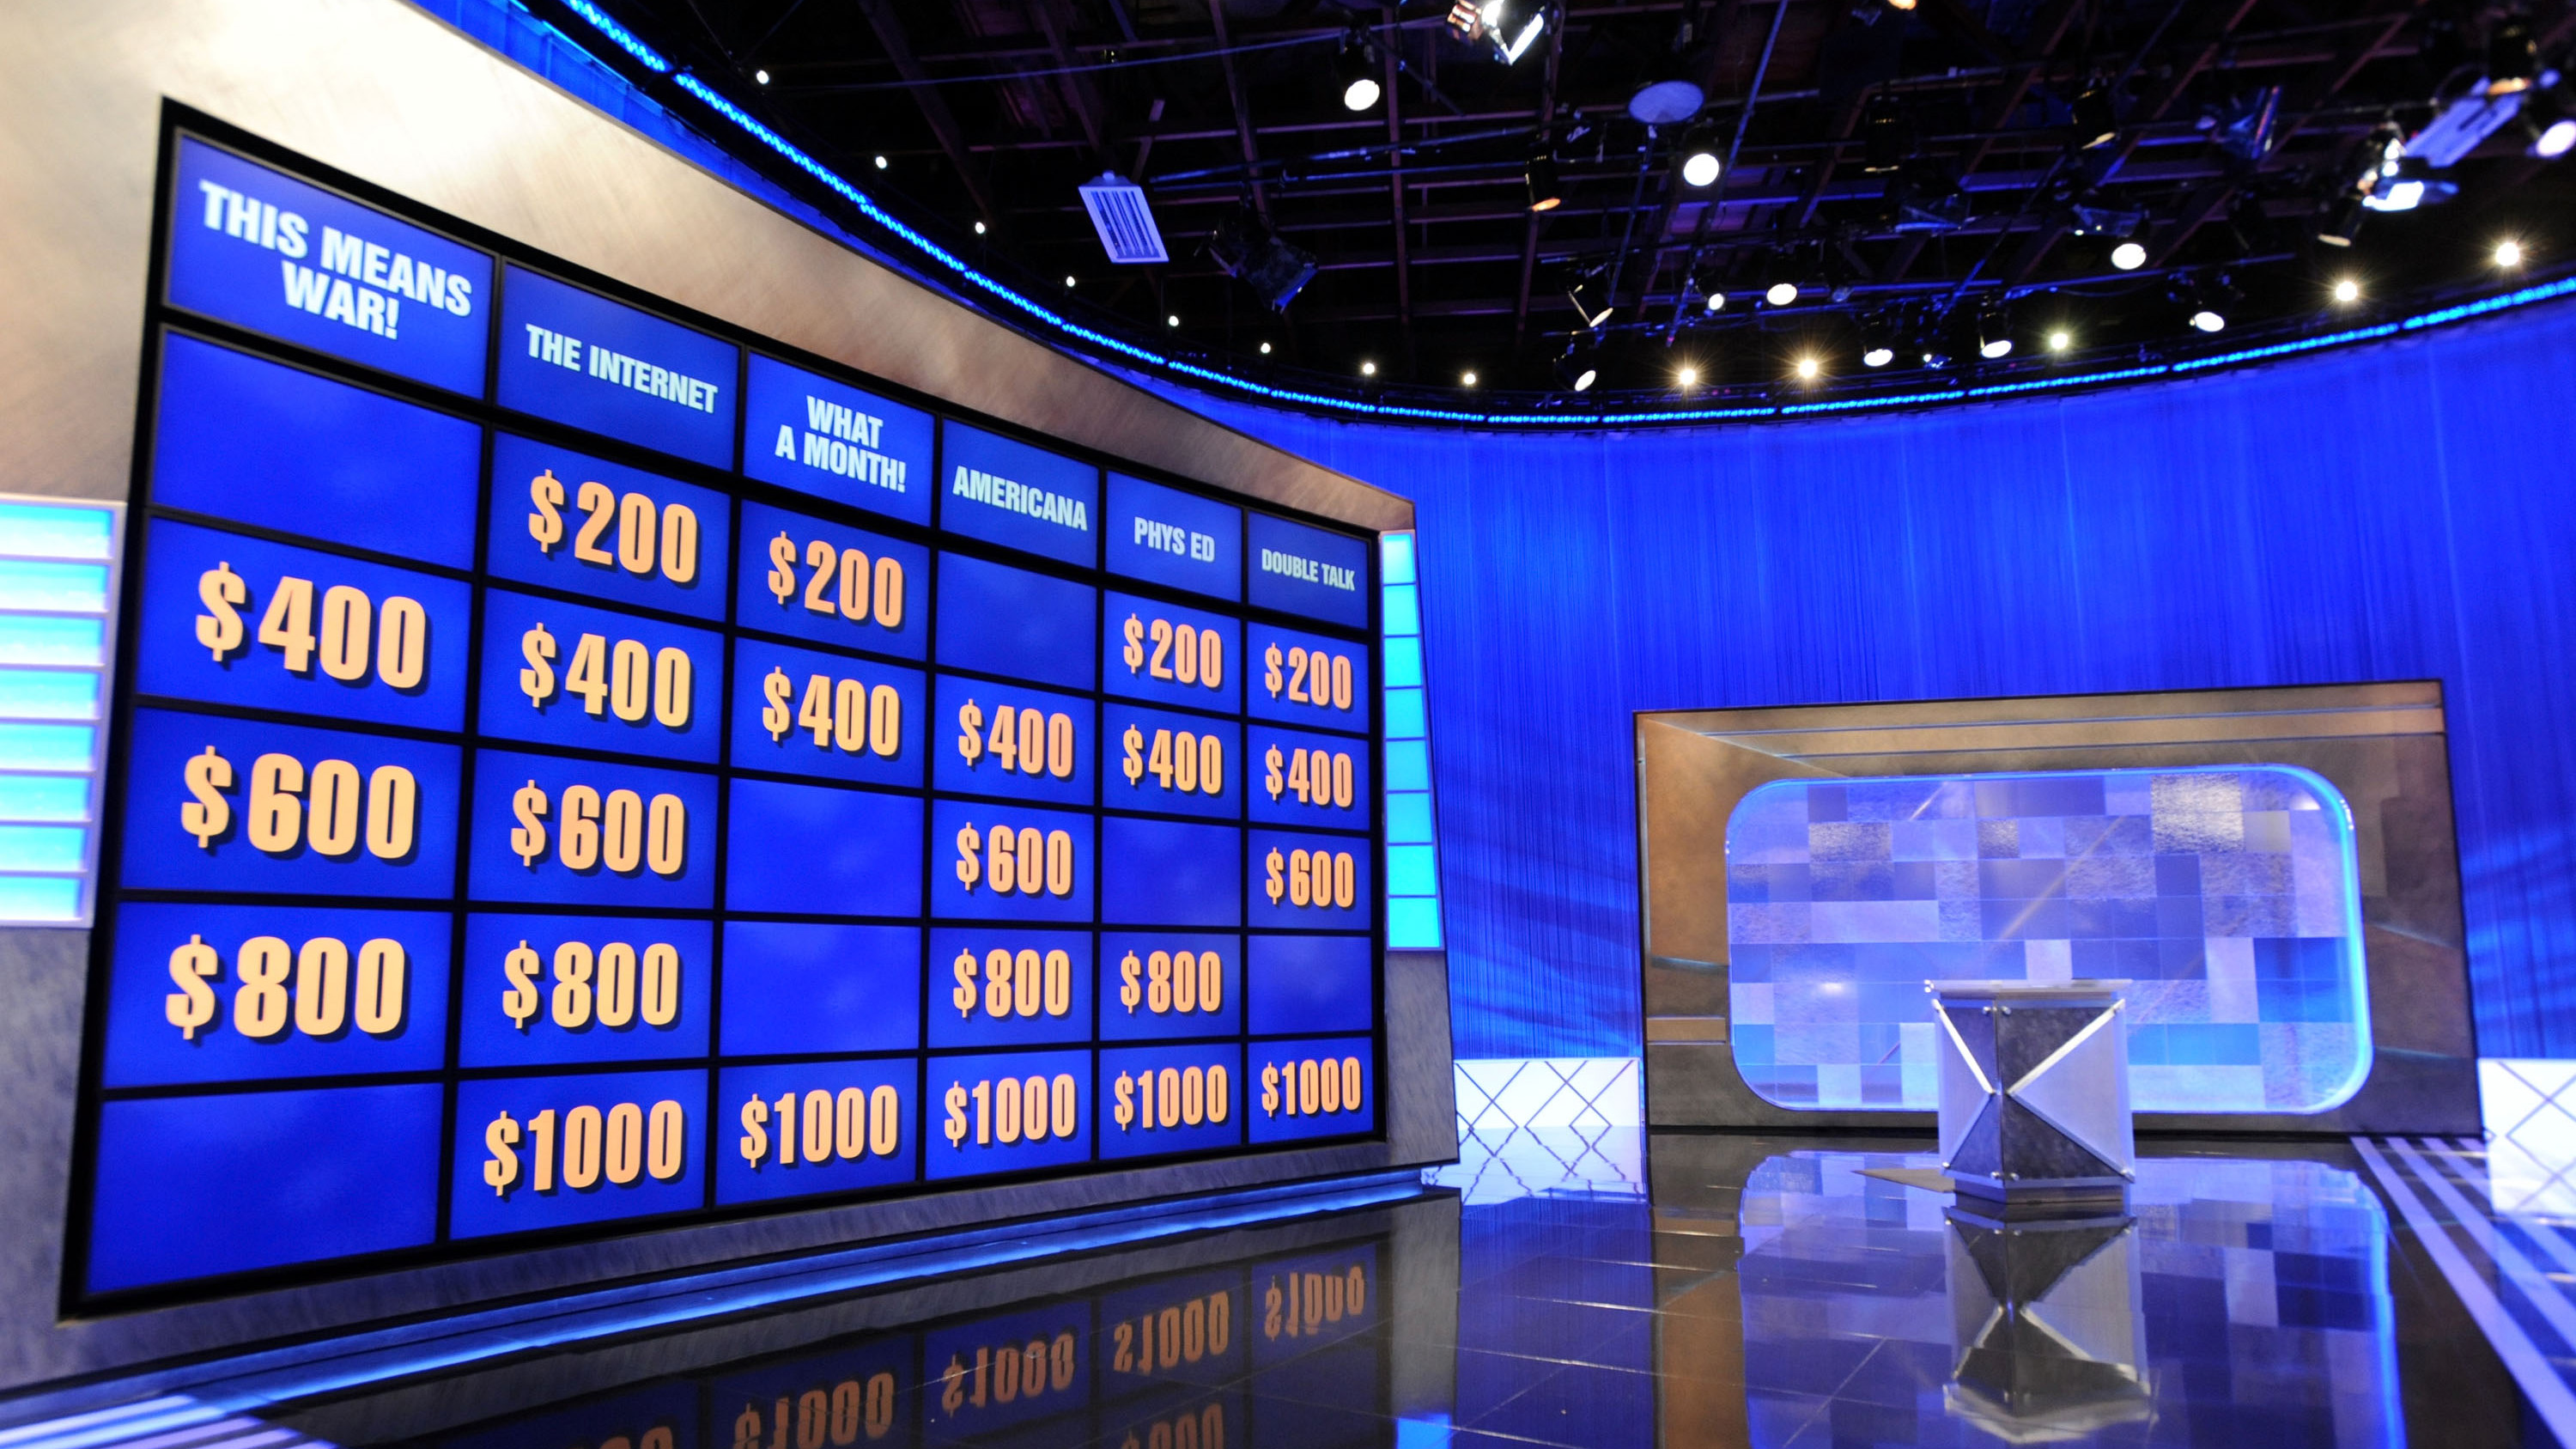 jeopardy-season-40-in-jeopardy-say-past-champs